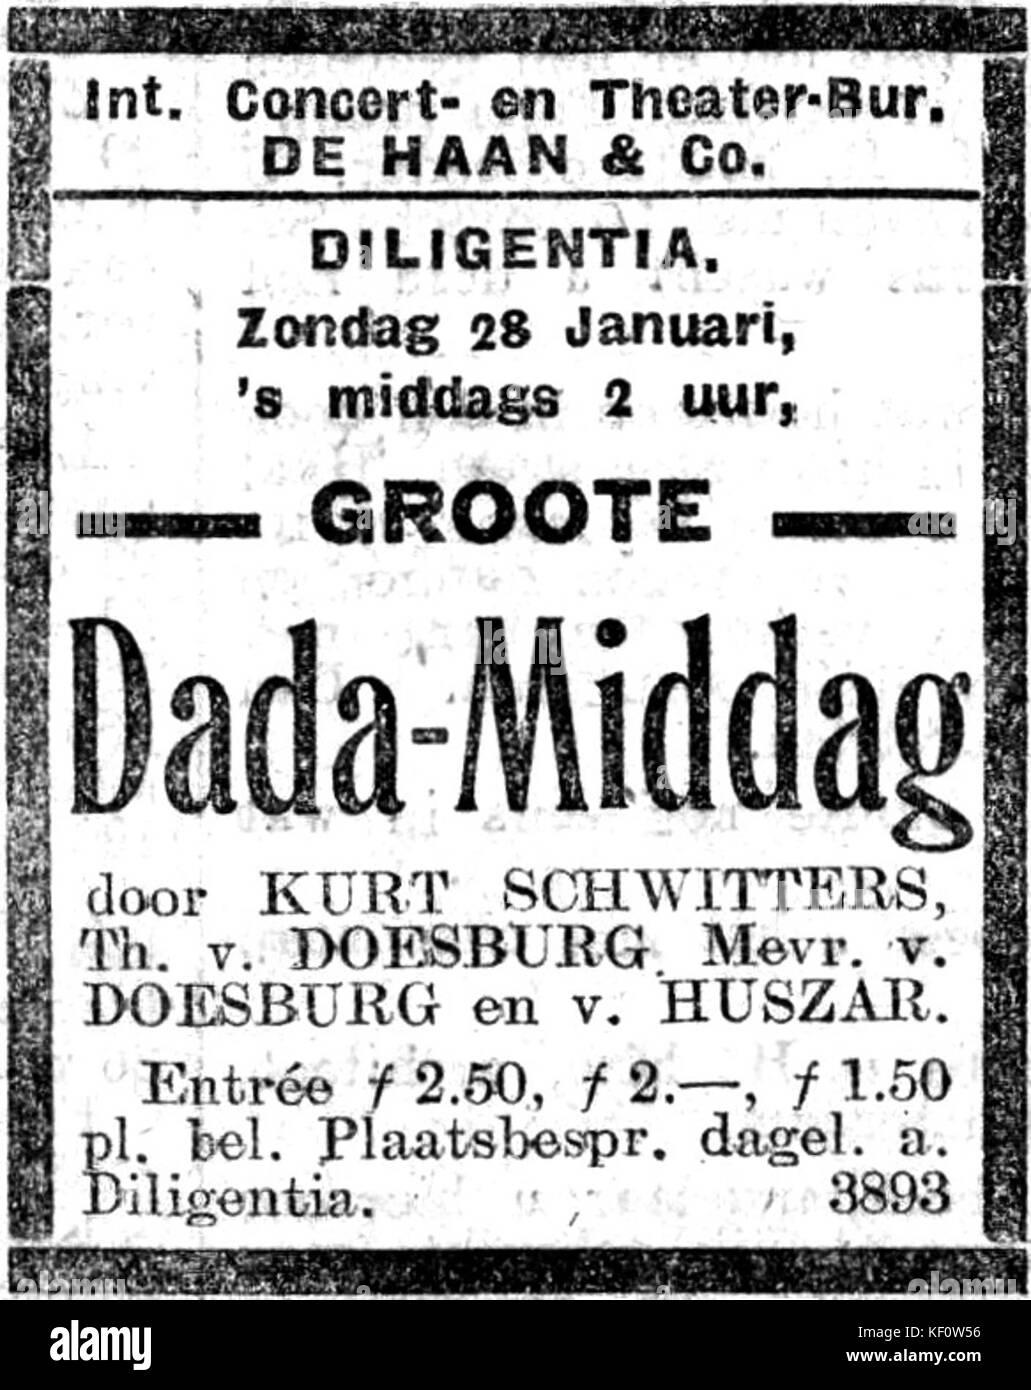 Haagsche Courant no 12253 advertisement Dada Middag Stock Photo